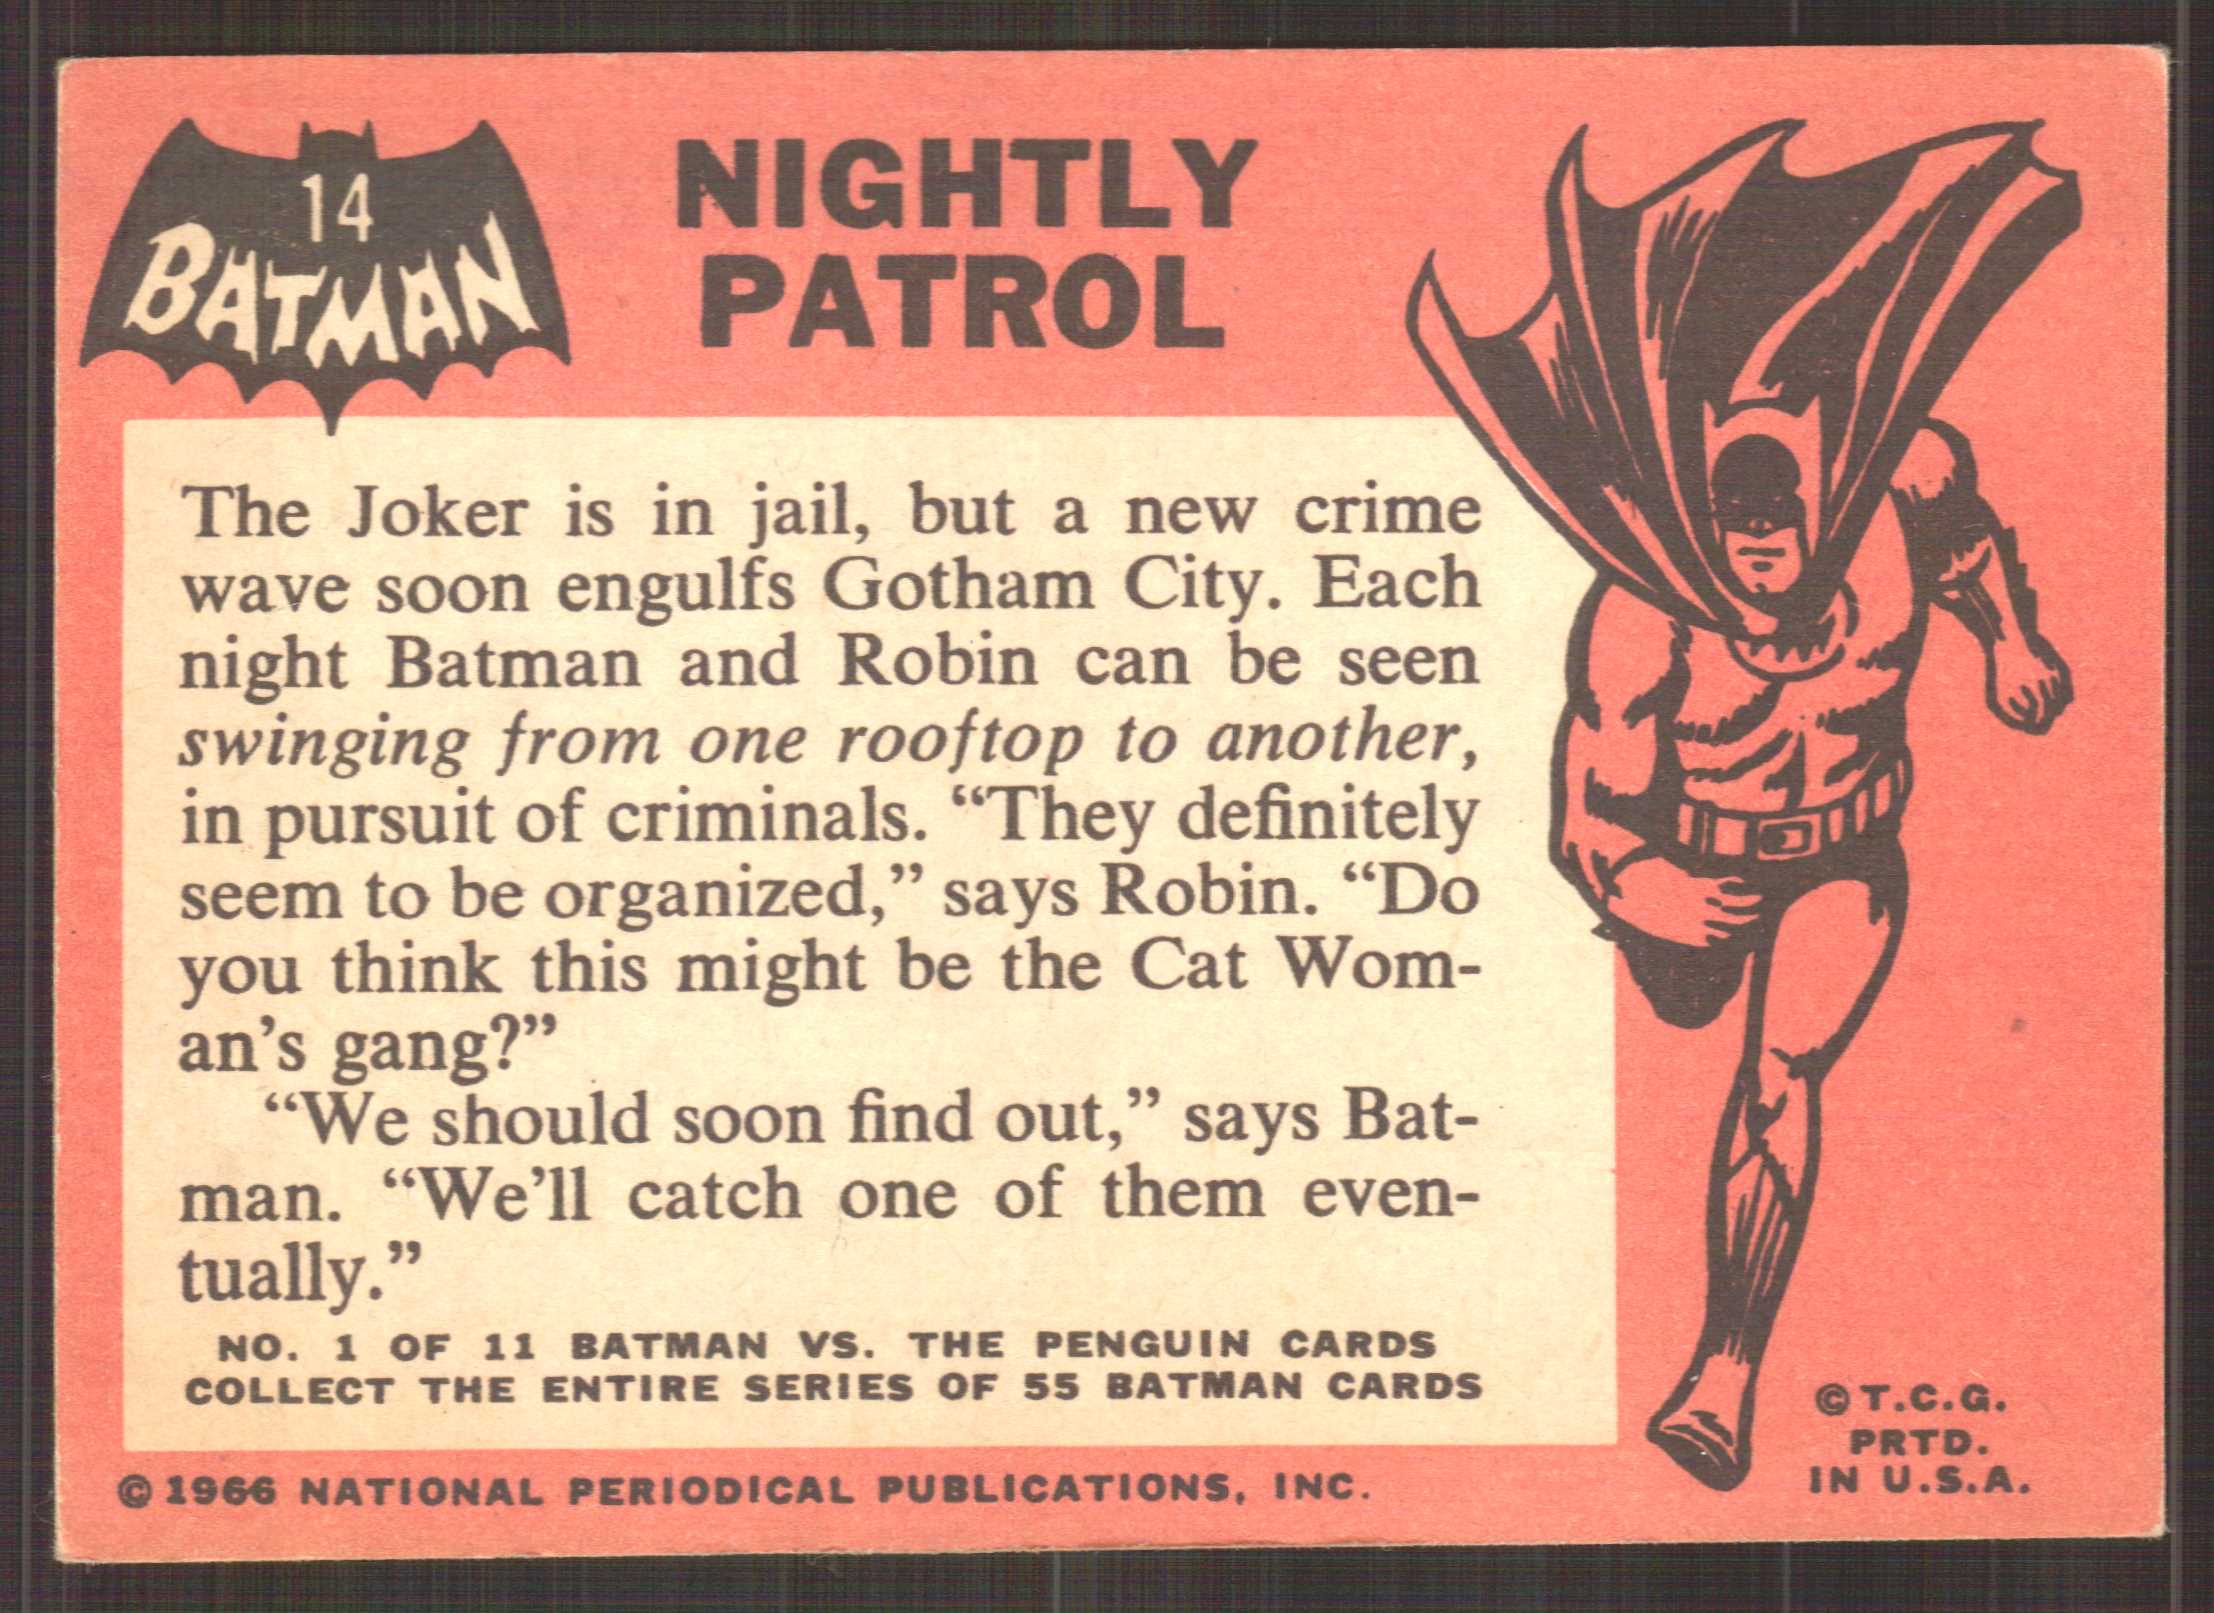 1966 Topps Batman Black Bat #14 Nightly Patrol back image